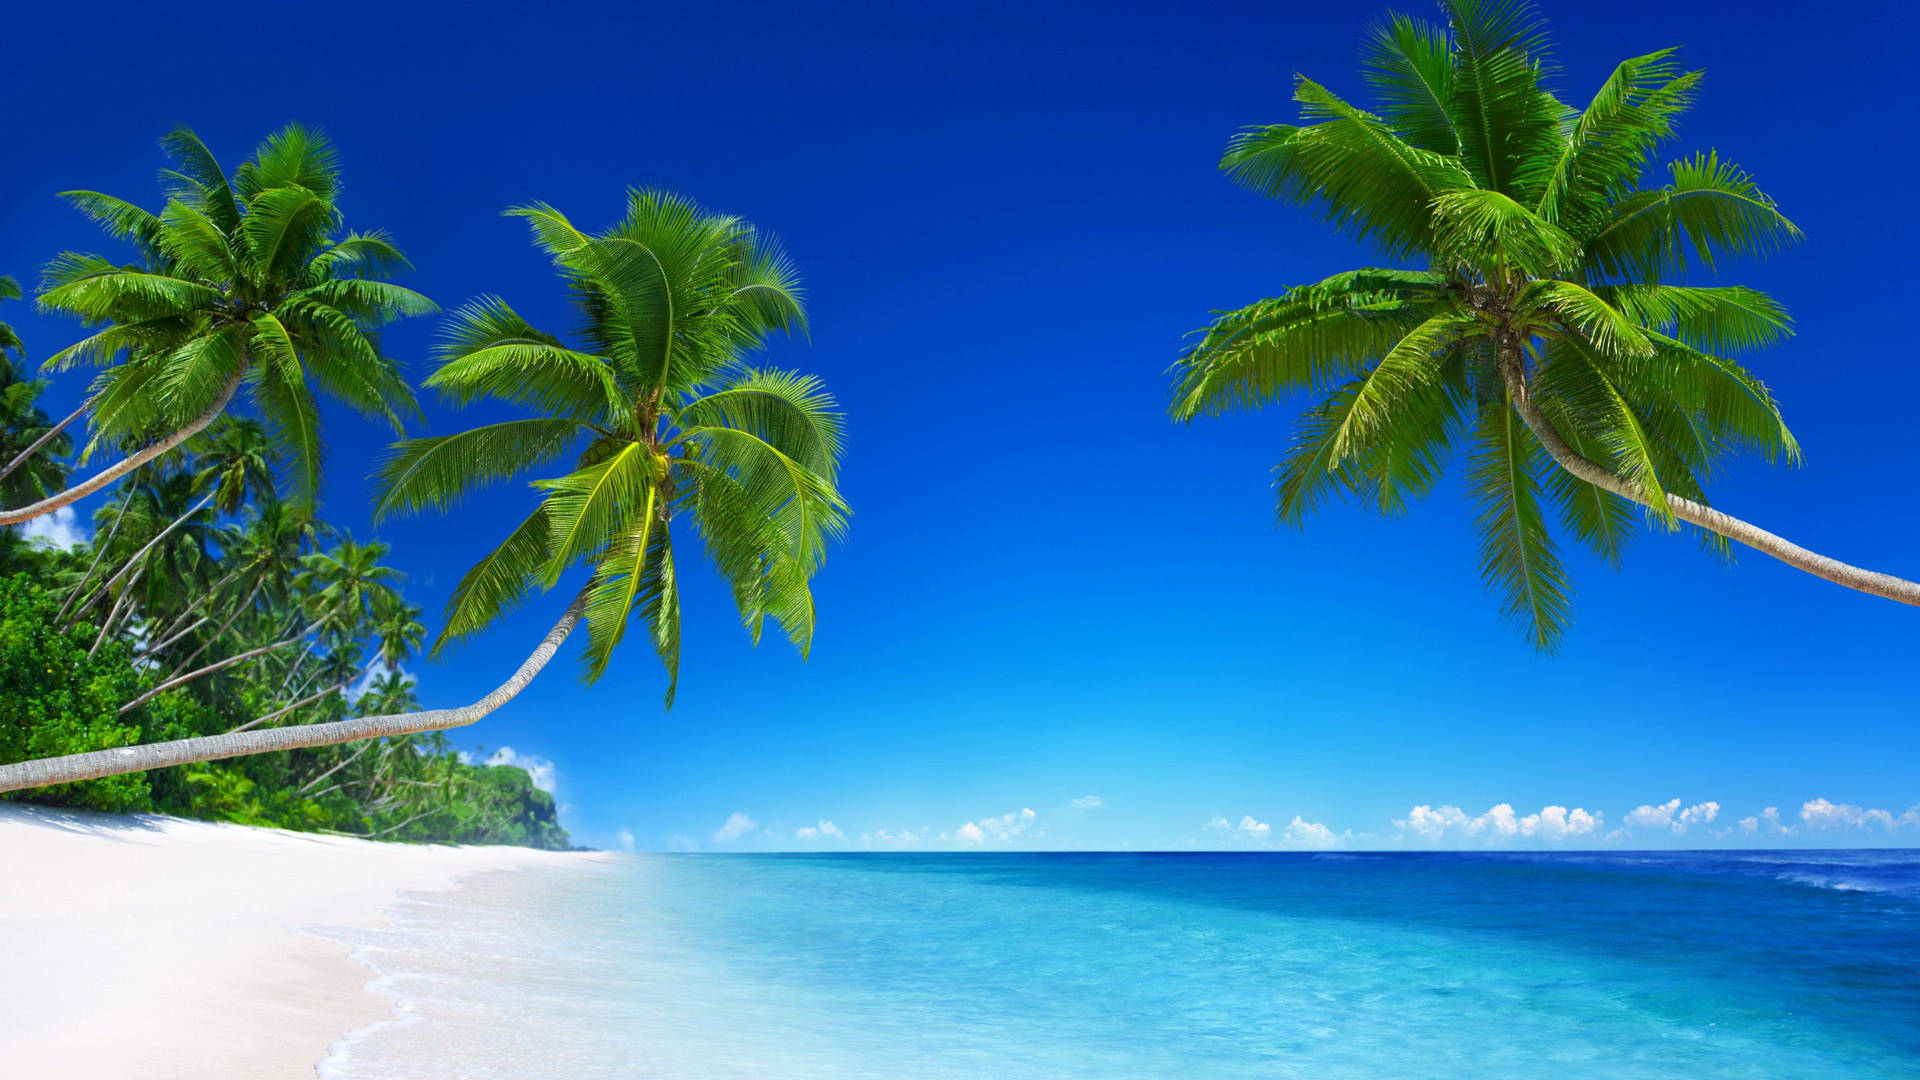 Fiji Tall Palm Trees Background